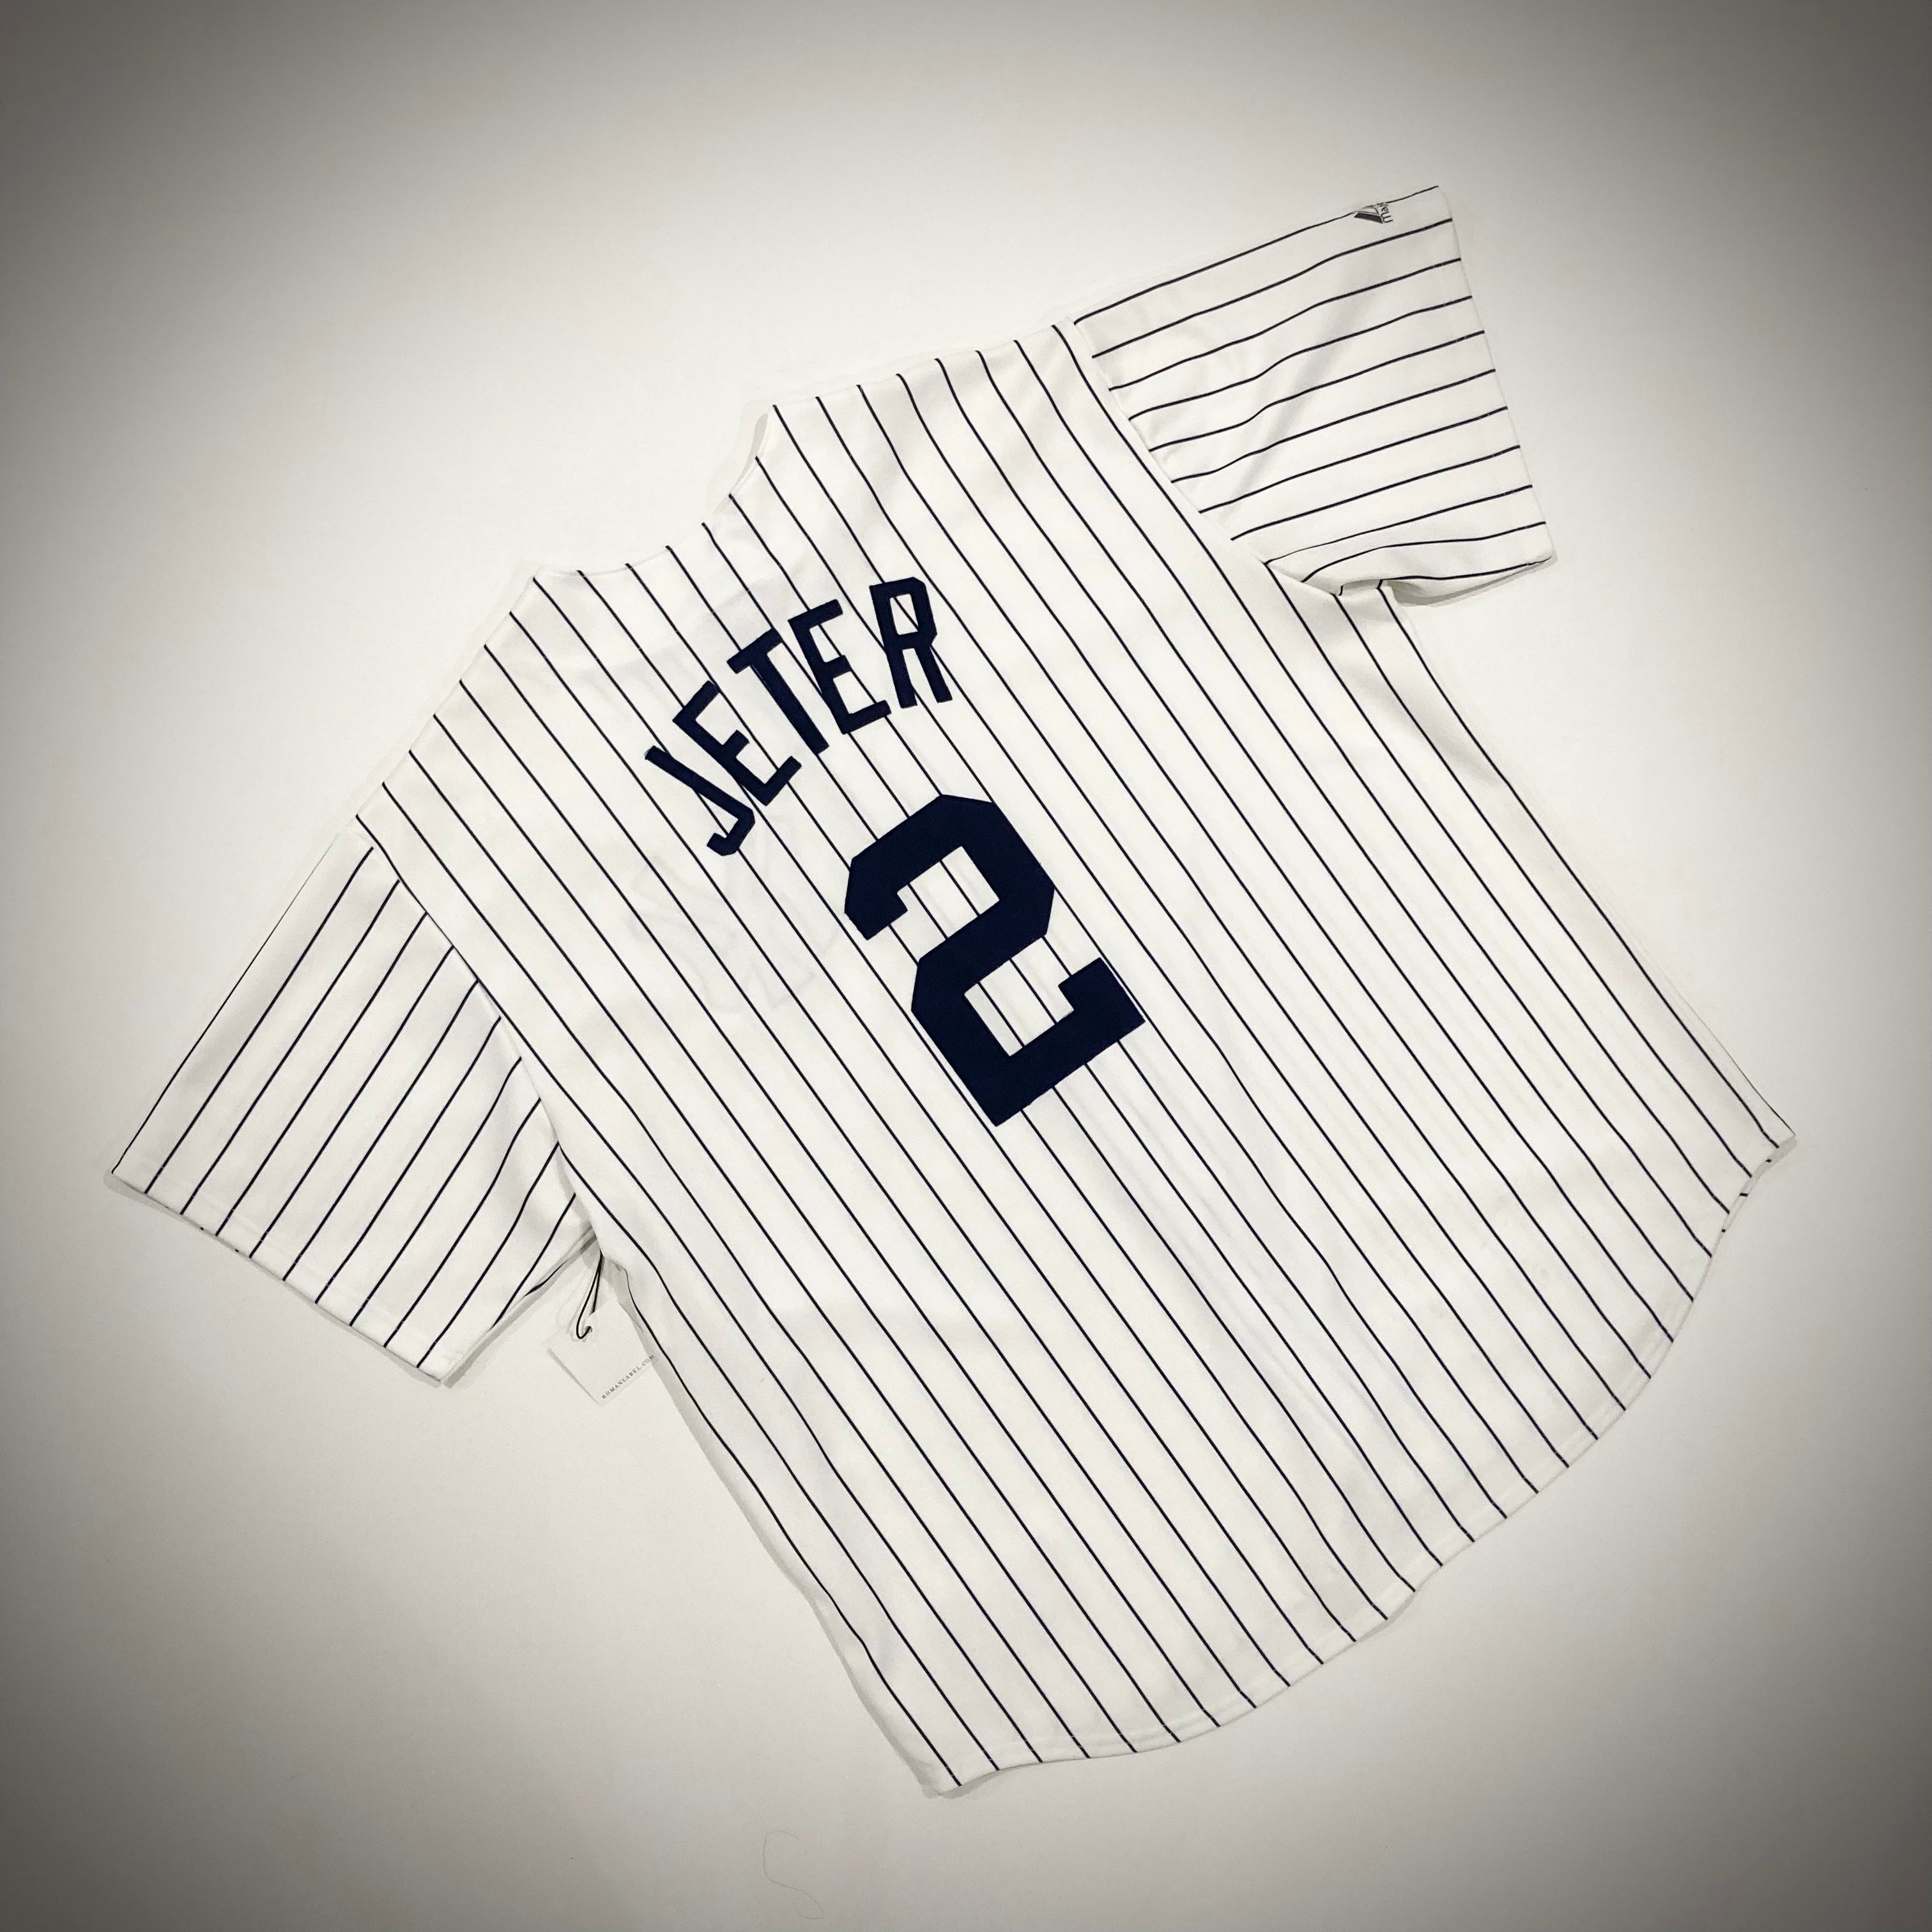 New York Yankees Derek Jeter Jersey